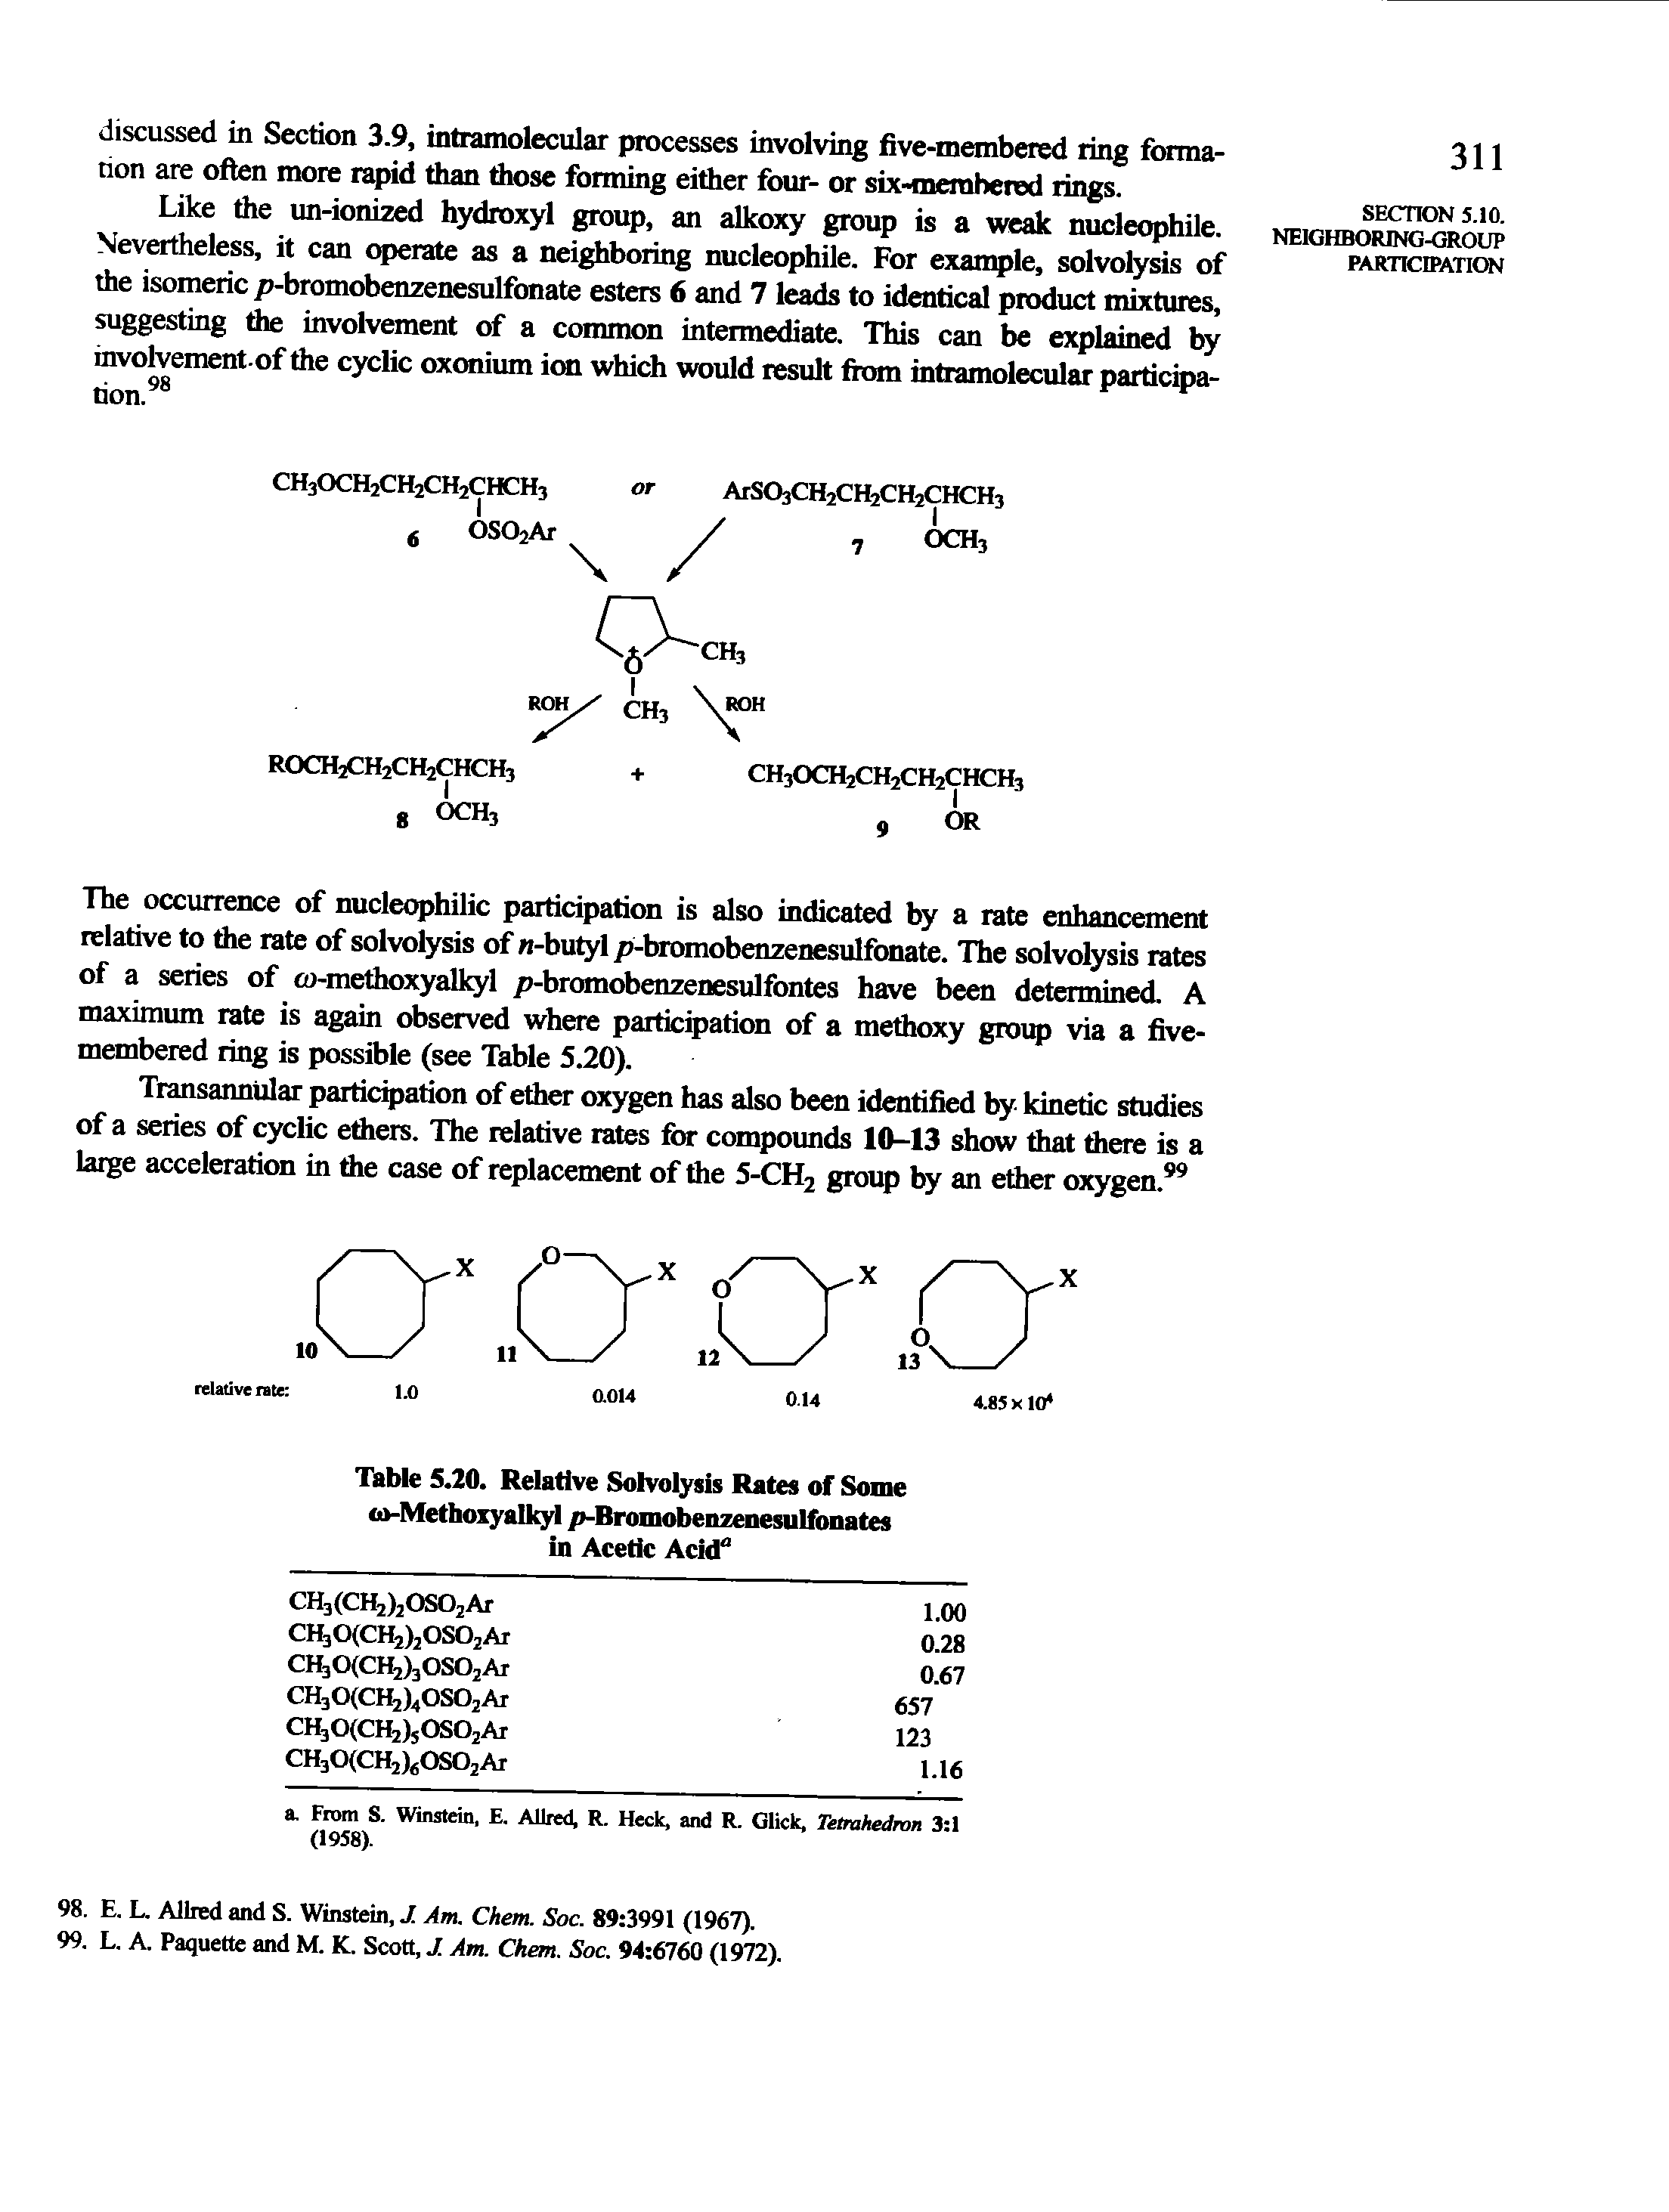 Table 5.20. Relative Solvolysis Rates of Some <o-MethoxyaIkyl / BromobeIlzenesulfonates in Acetic Acid"...